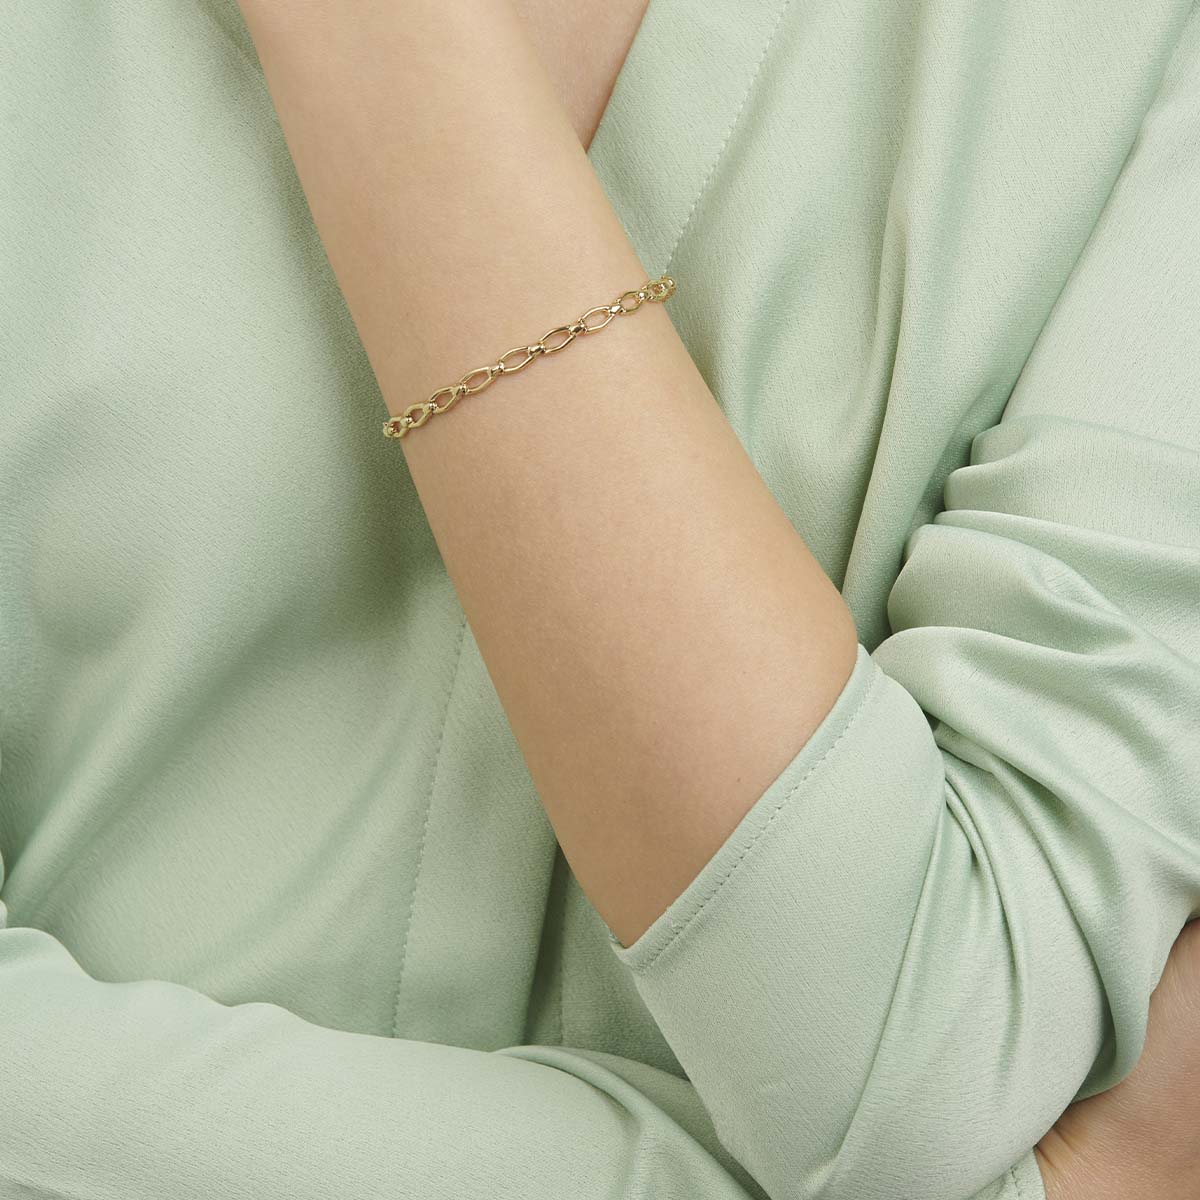 18ct solid fine gold bracelet chain